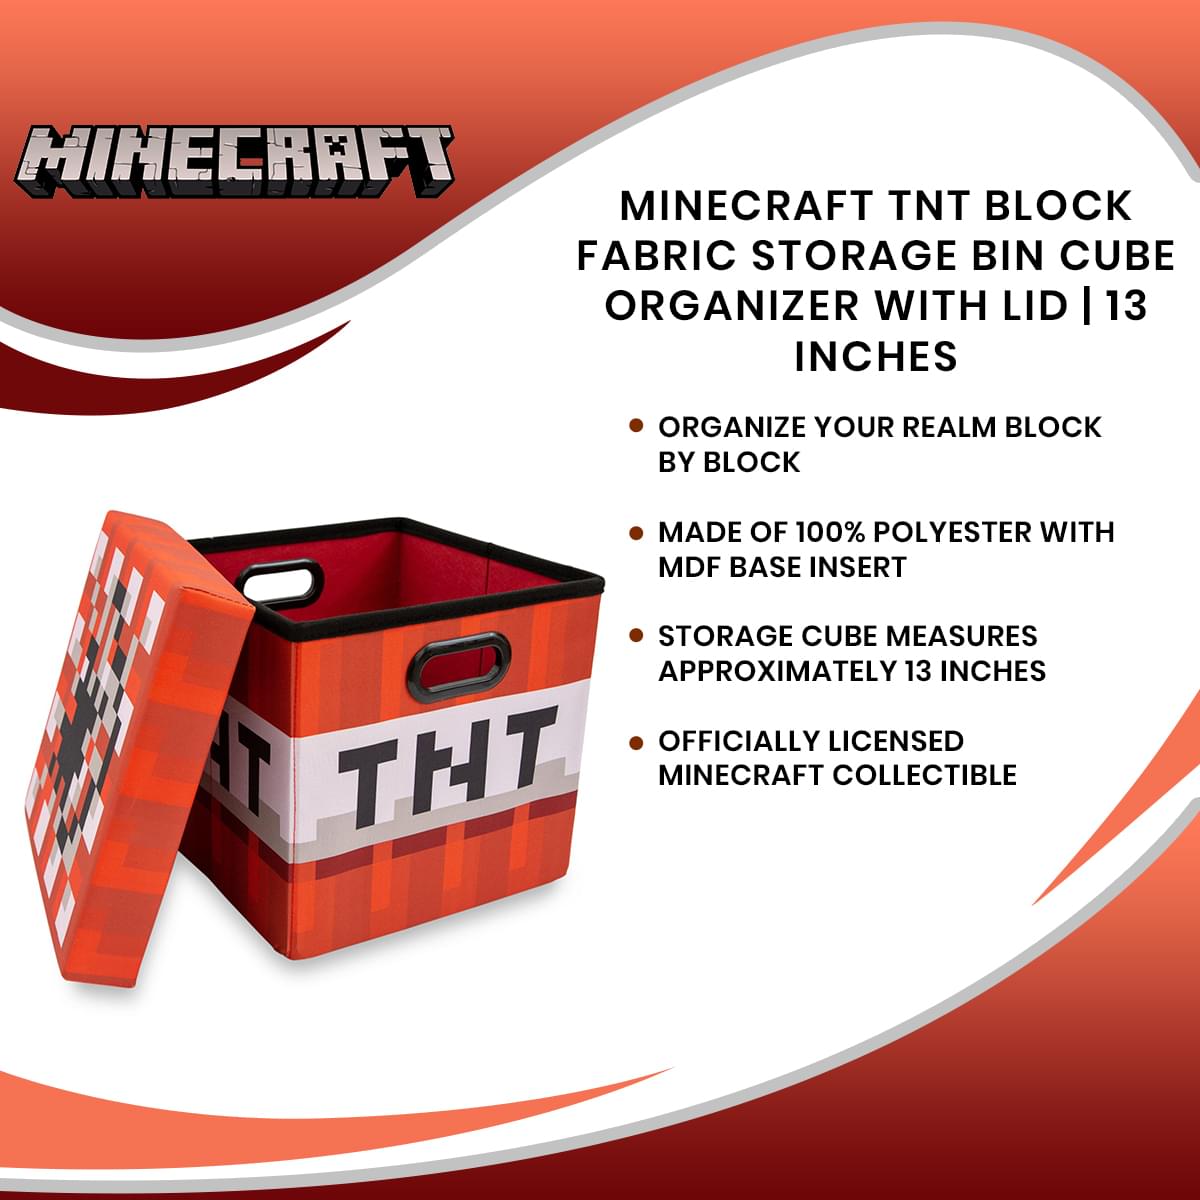 Minecraft TNT Block Fabric Storage Bin Cube Organizer with Lid | 13 Inches